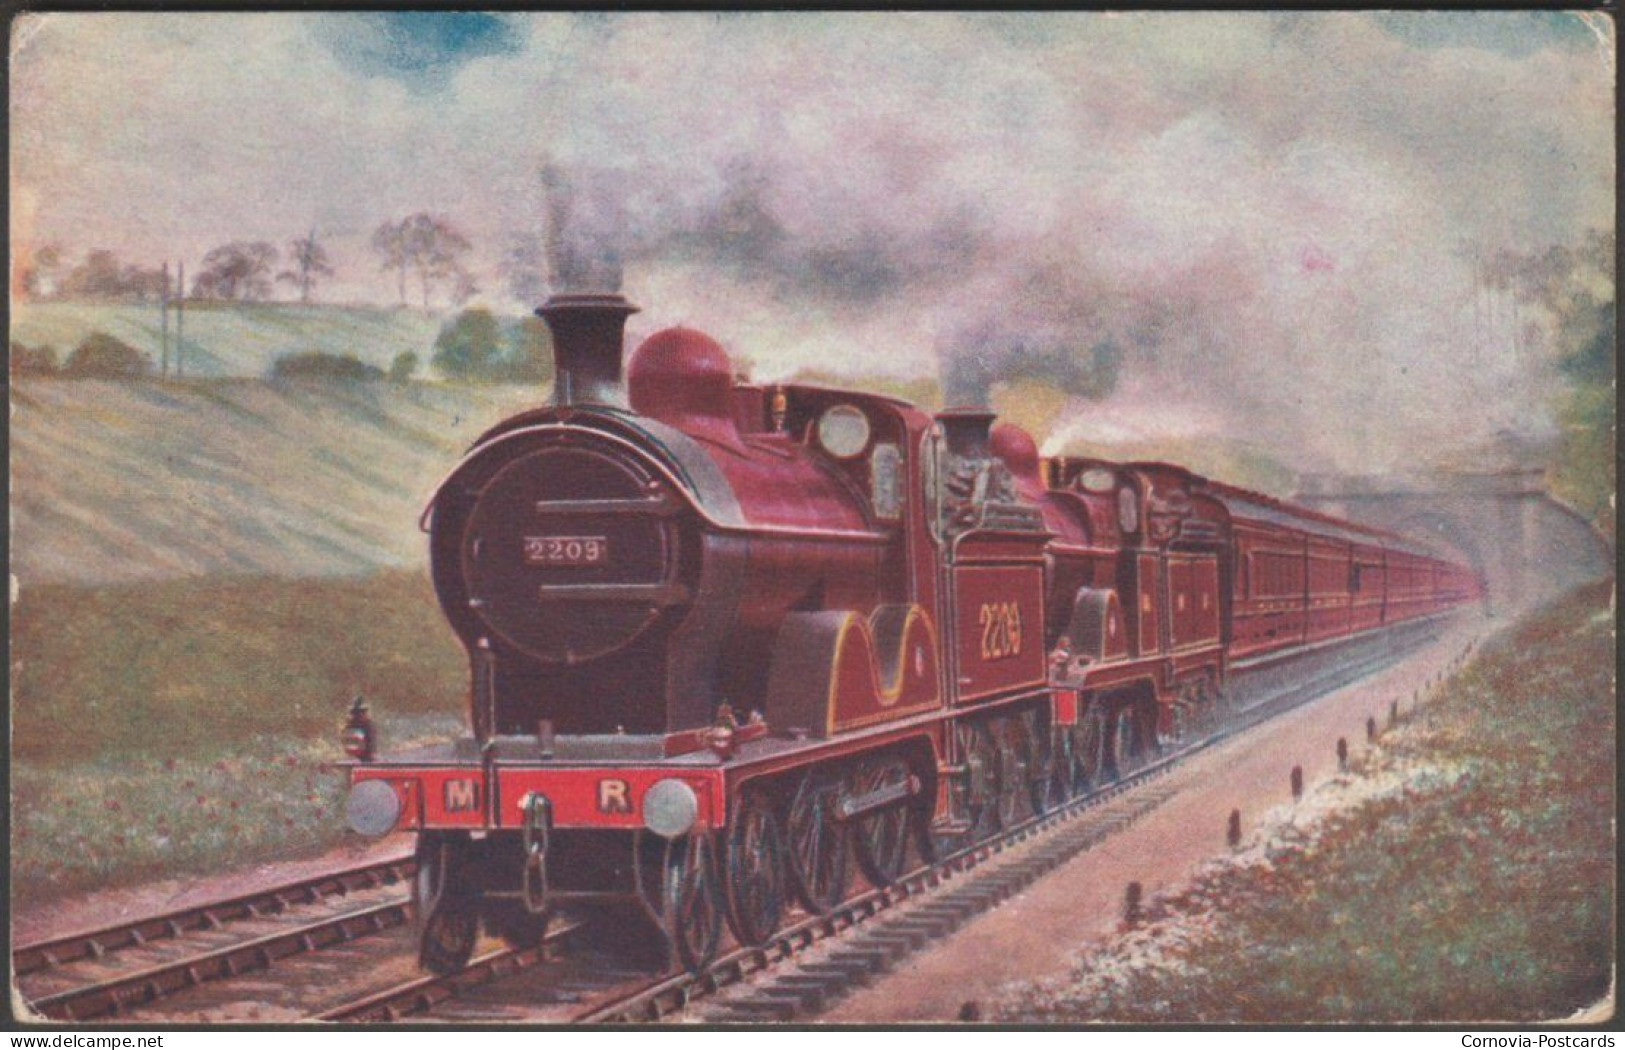 Midland Railway Leeds & Bradford Express, C.1910 - Locomotive Publishing Co Postcard - Trains